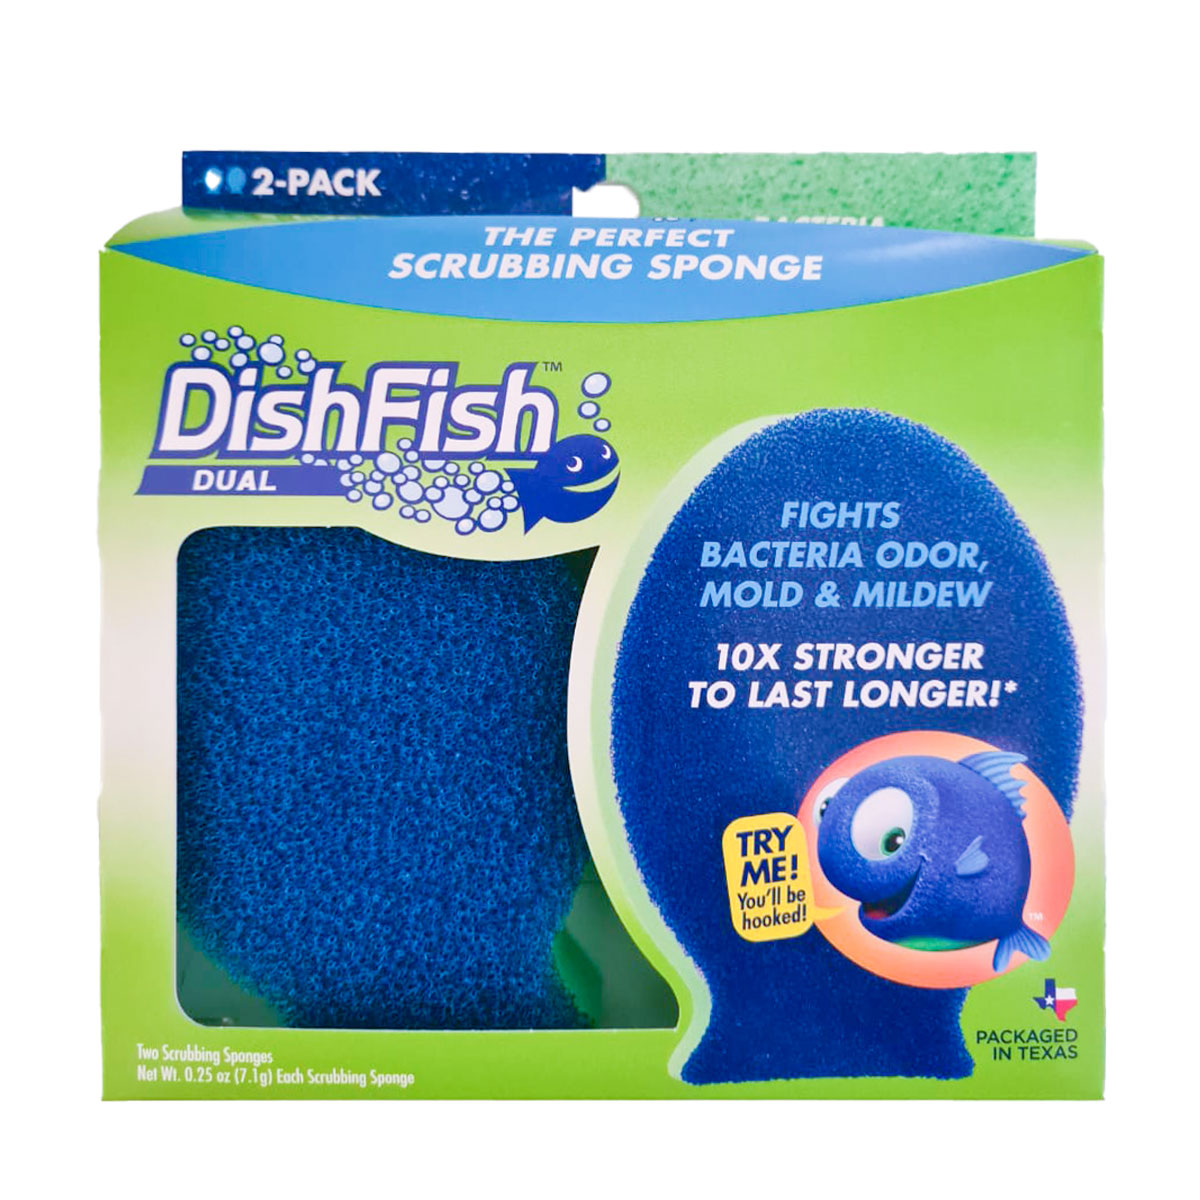 Esponja DishFish Dual, con tecnología PowerCell™ anti rayados, 2 unidades